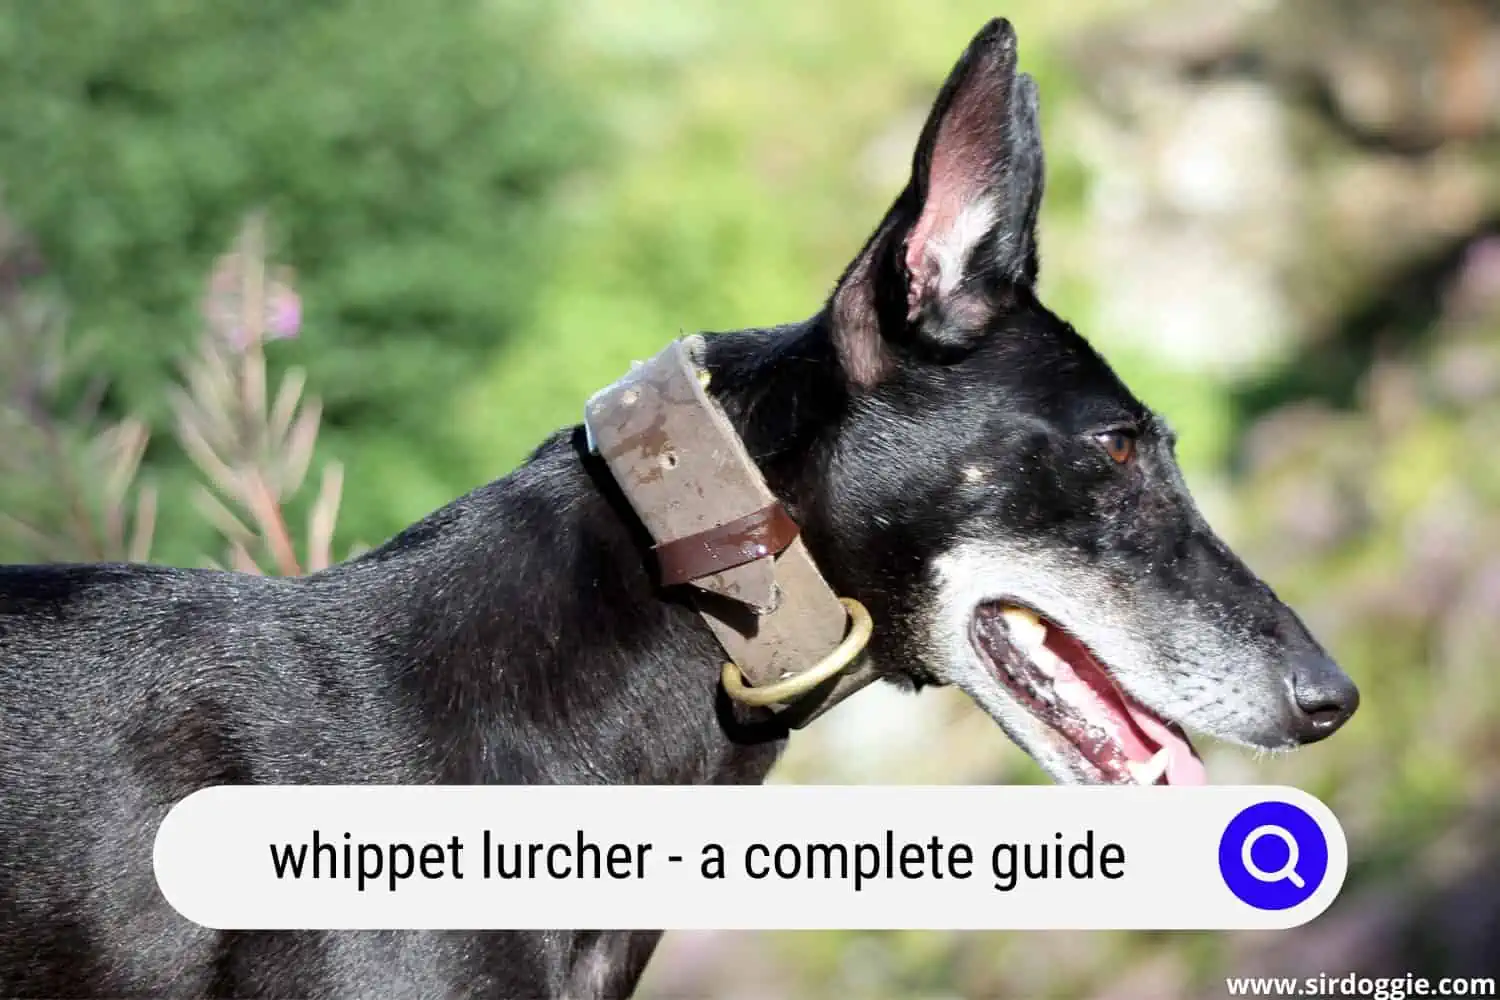 whippet lurcher guide